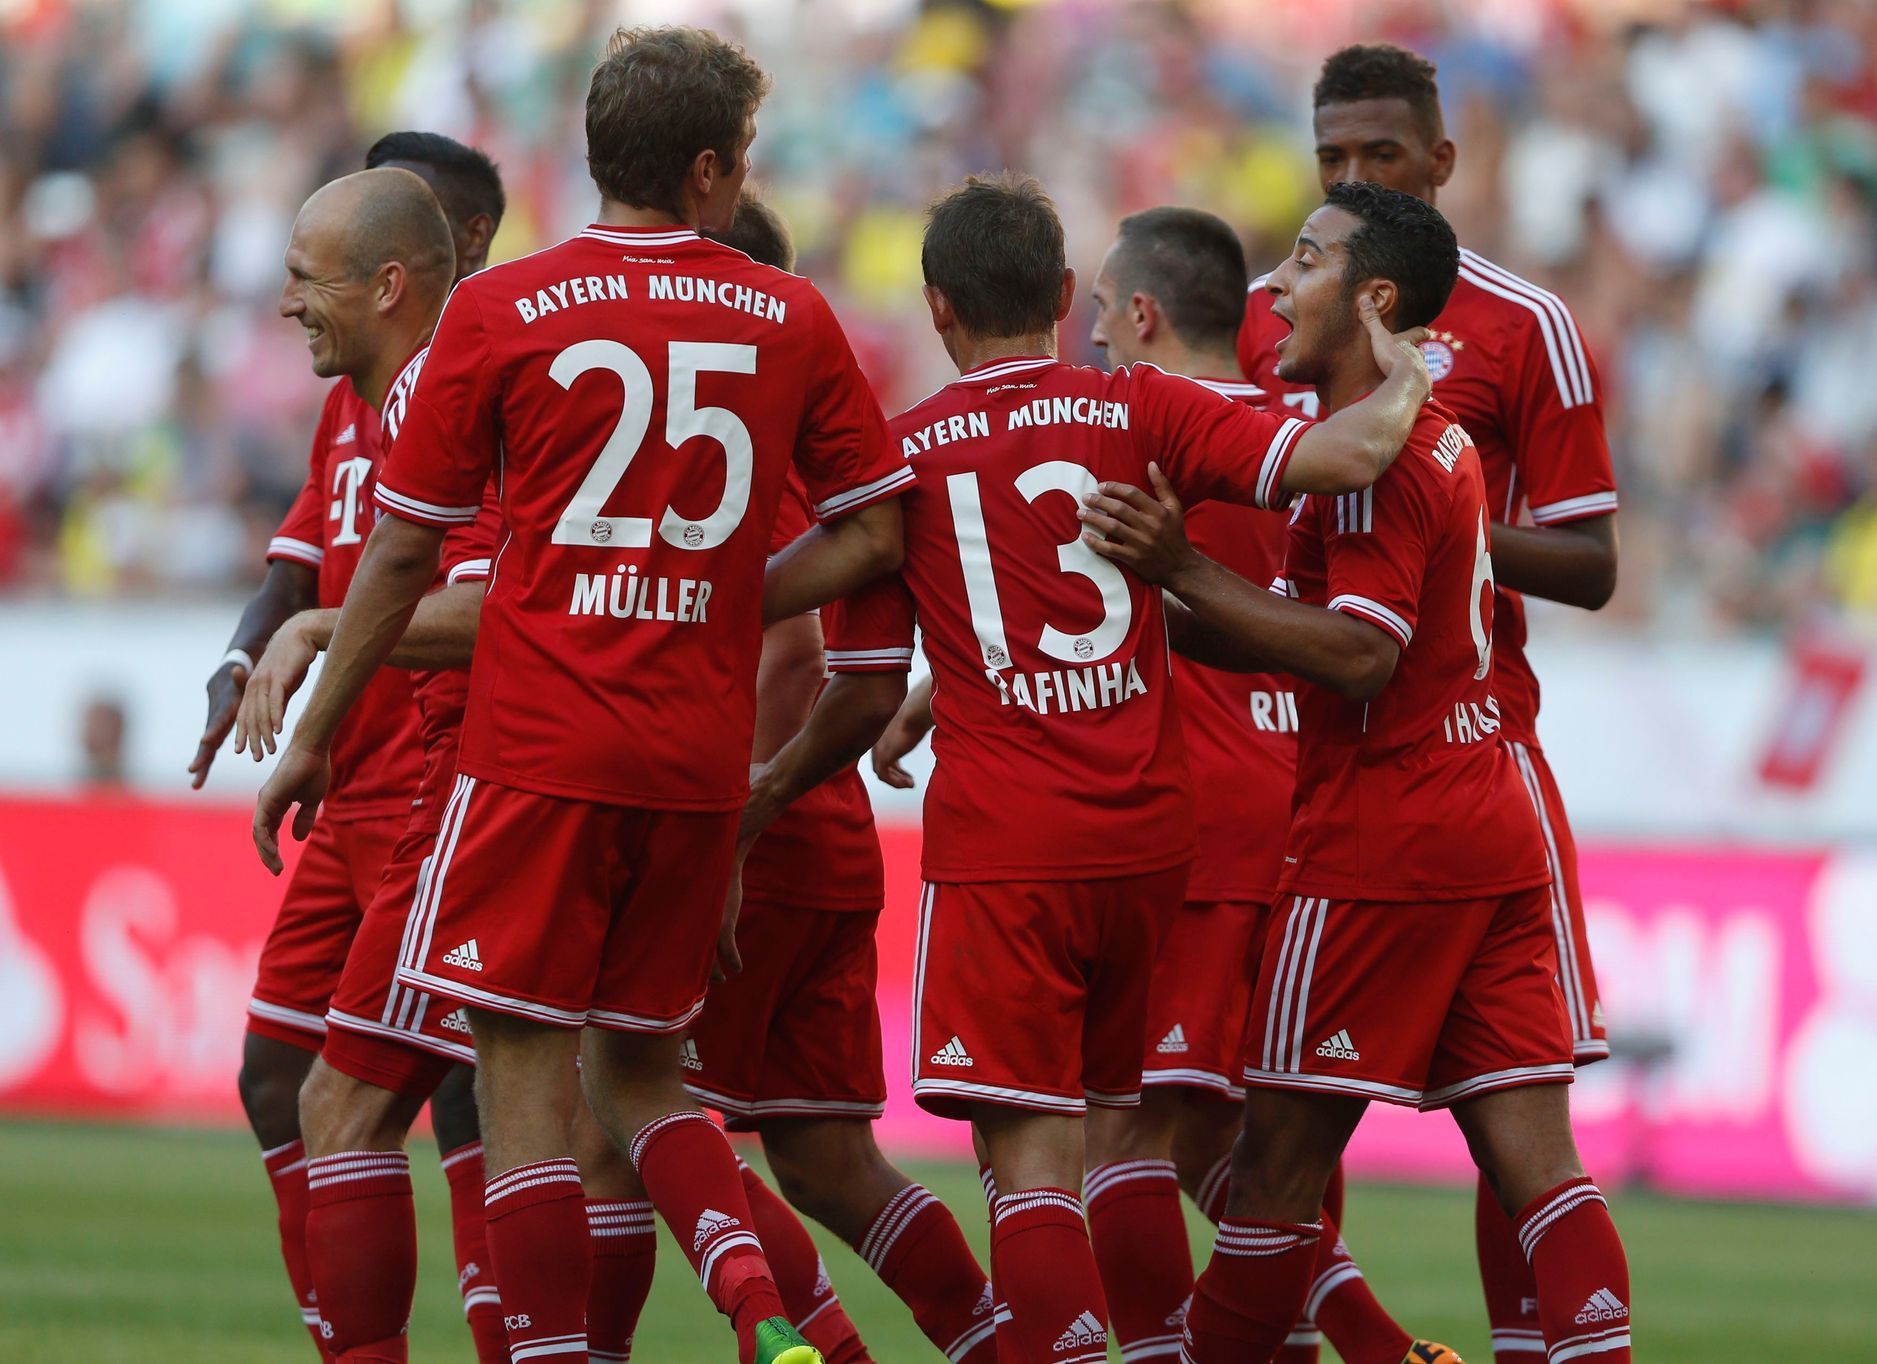 Radost Bayernu Mnichov